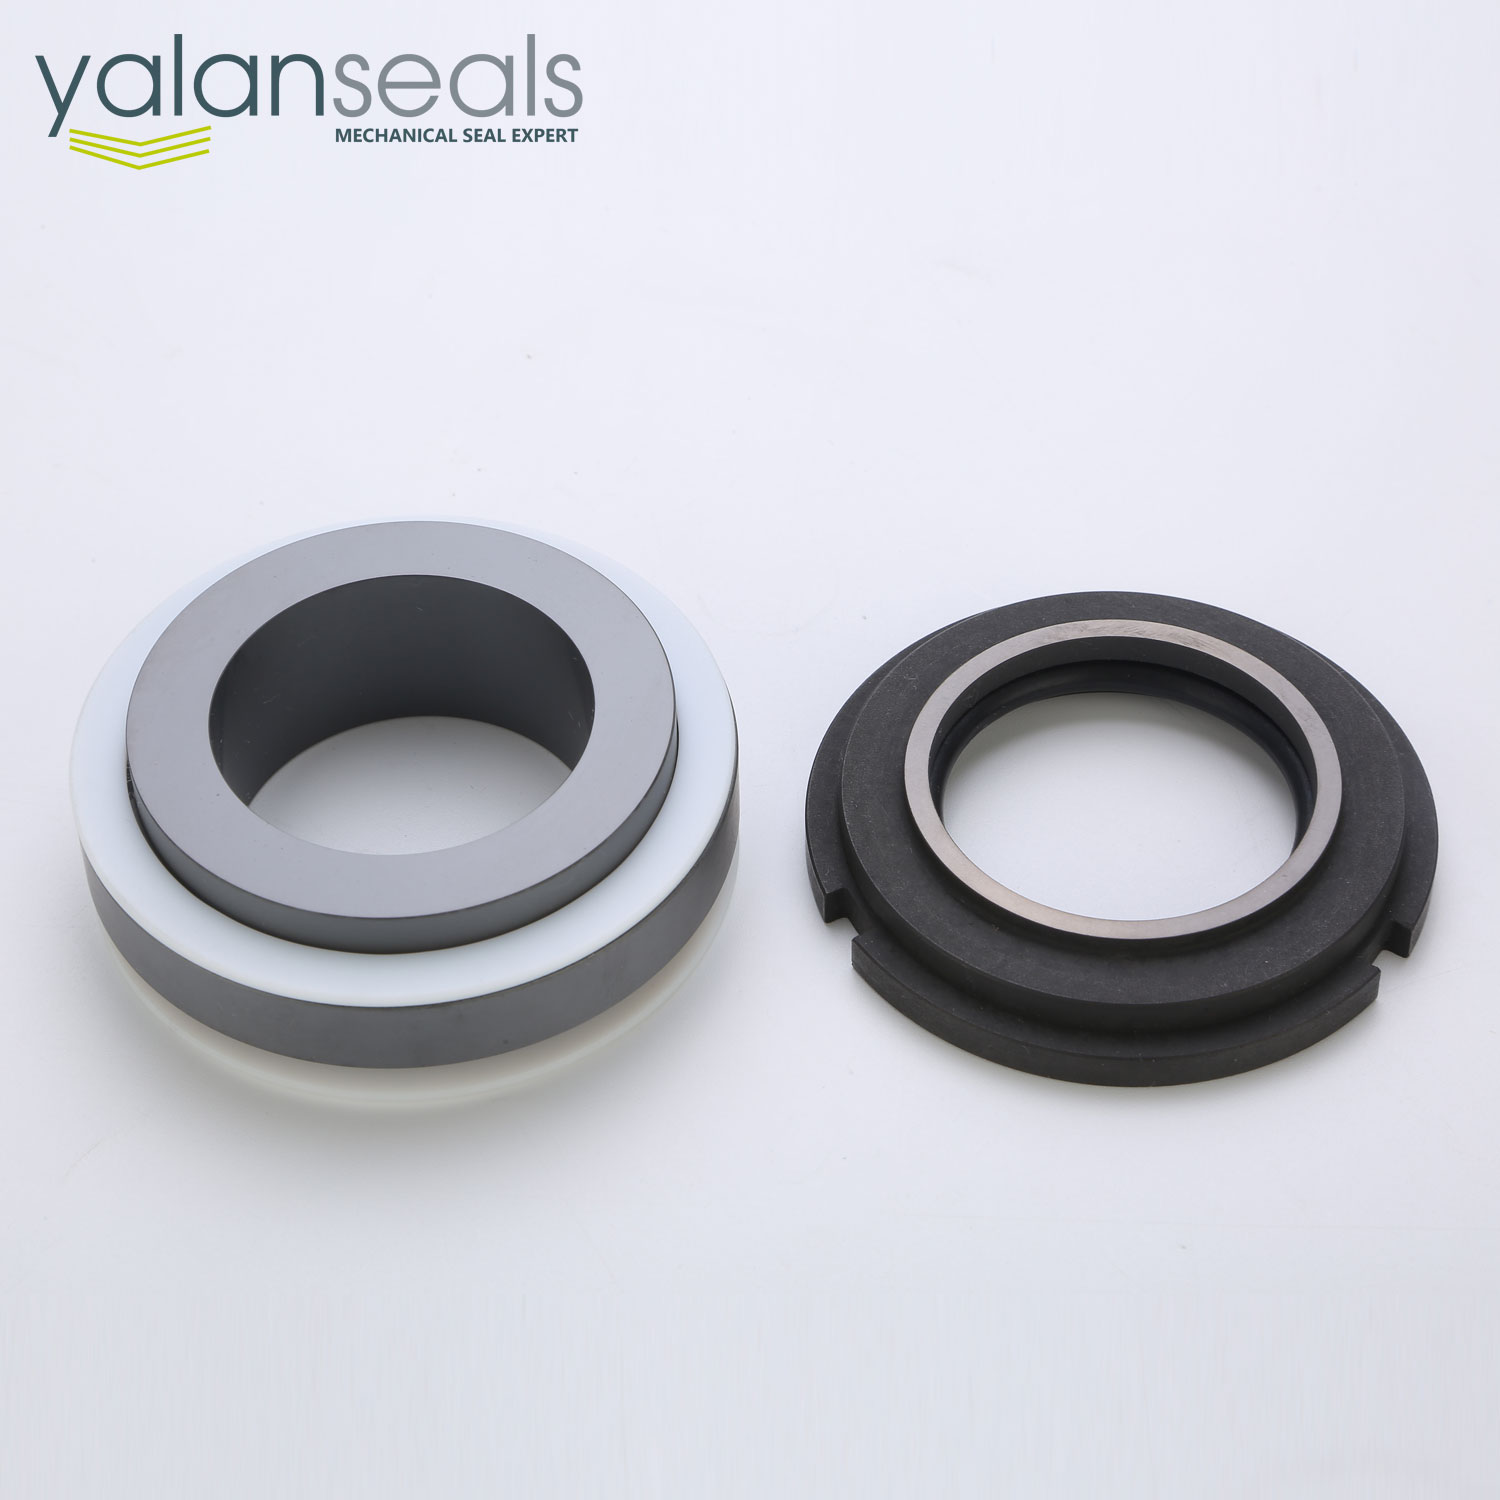 YALAN Waukesha 218-318 Mechanical Seal for Waukesha Lobe Pumps and Mixers